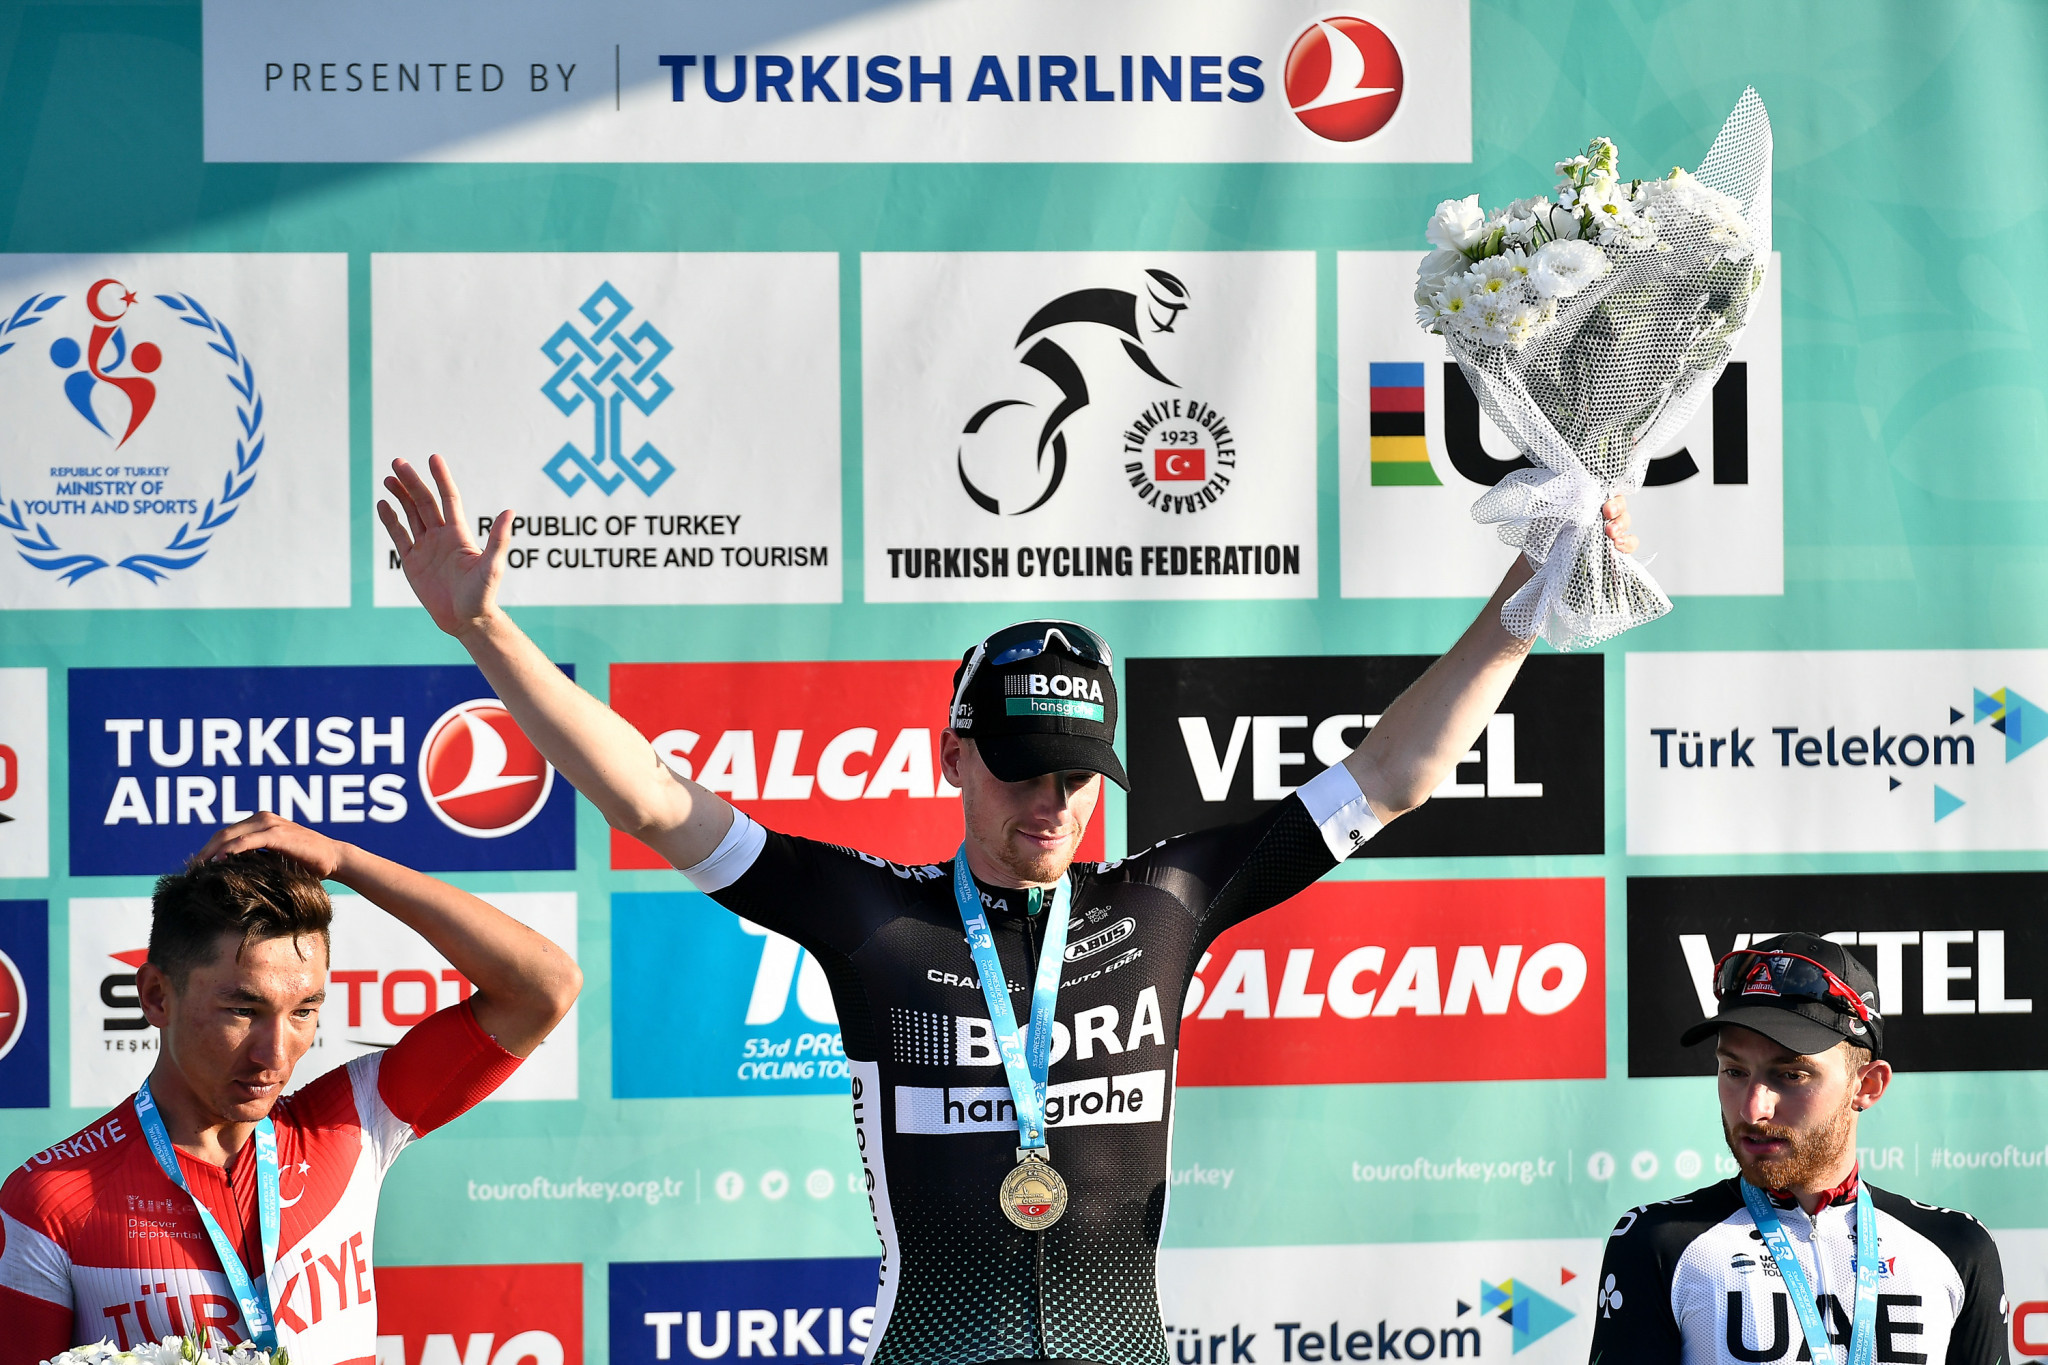 Bennett returns to top of podium at Tour of Turkey